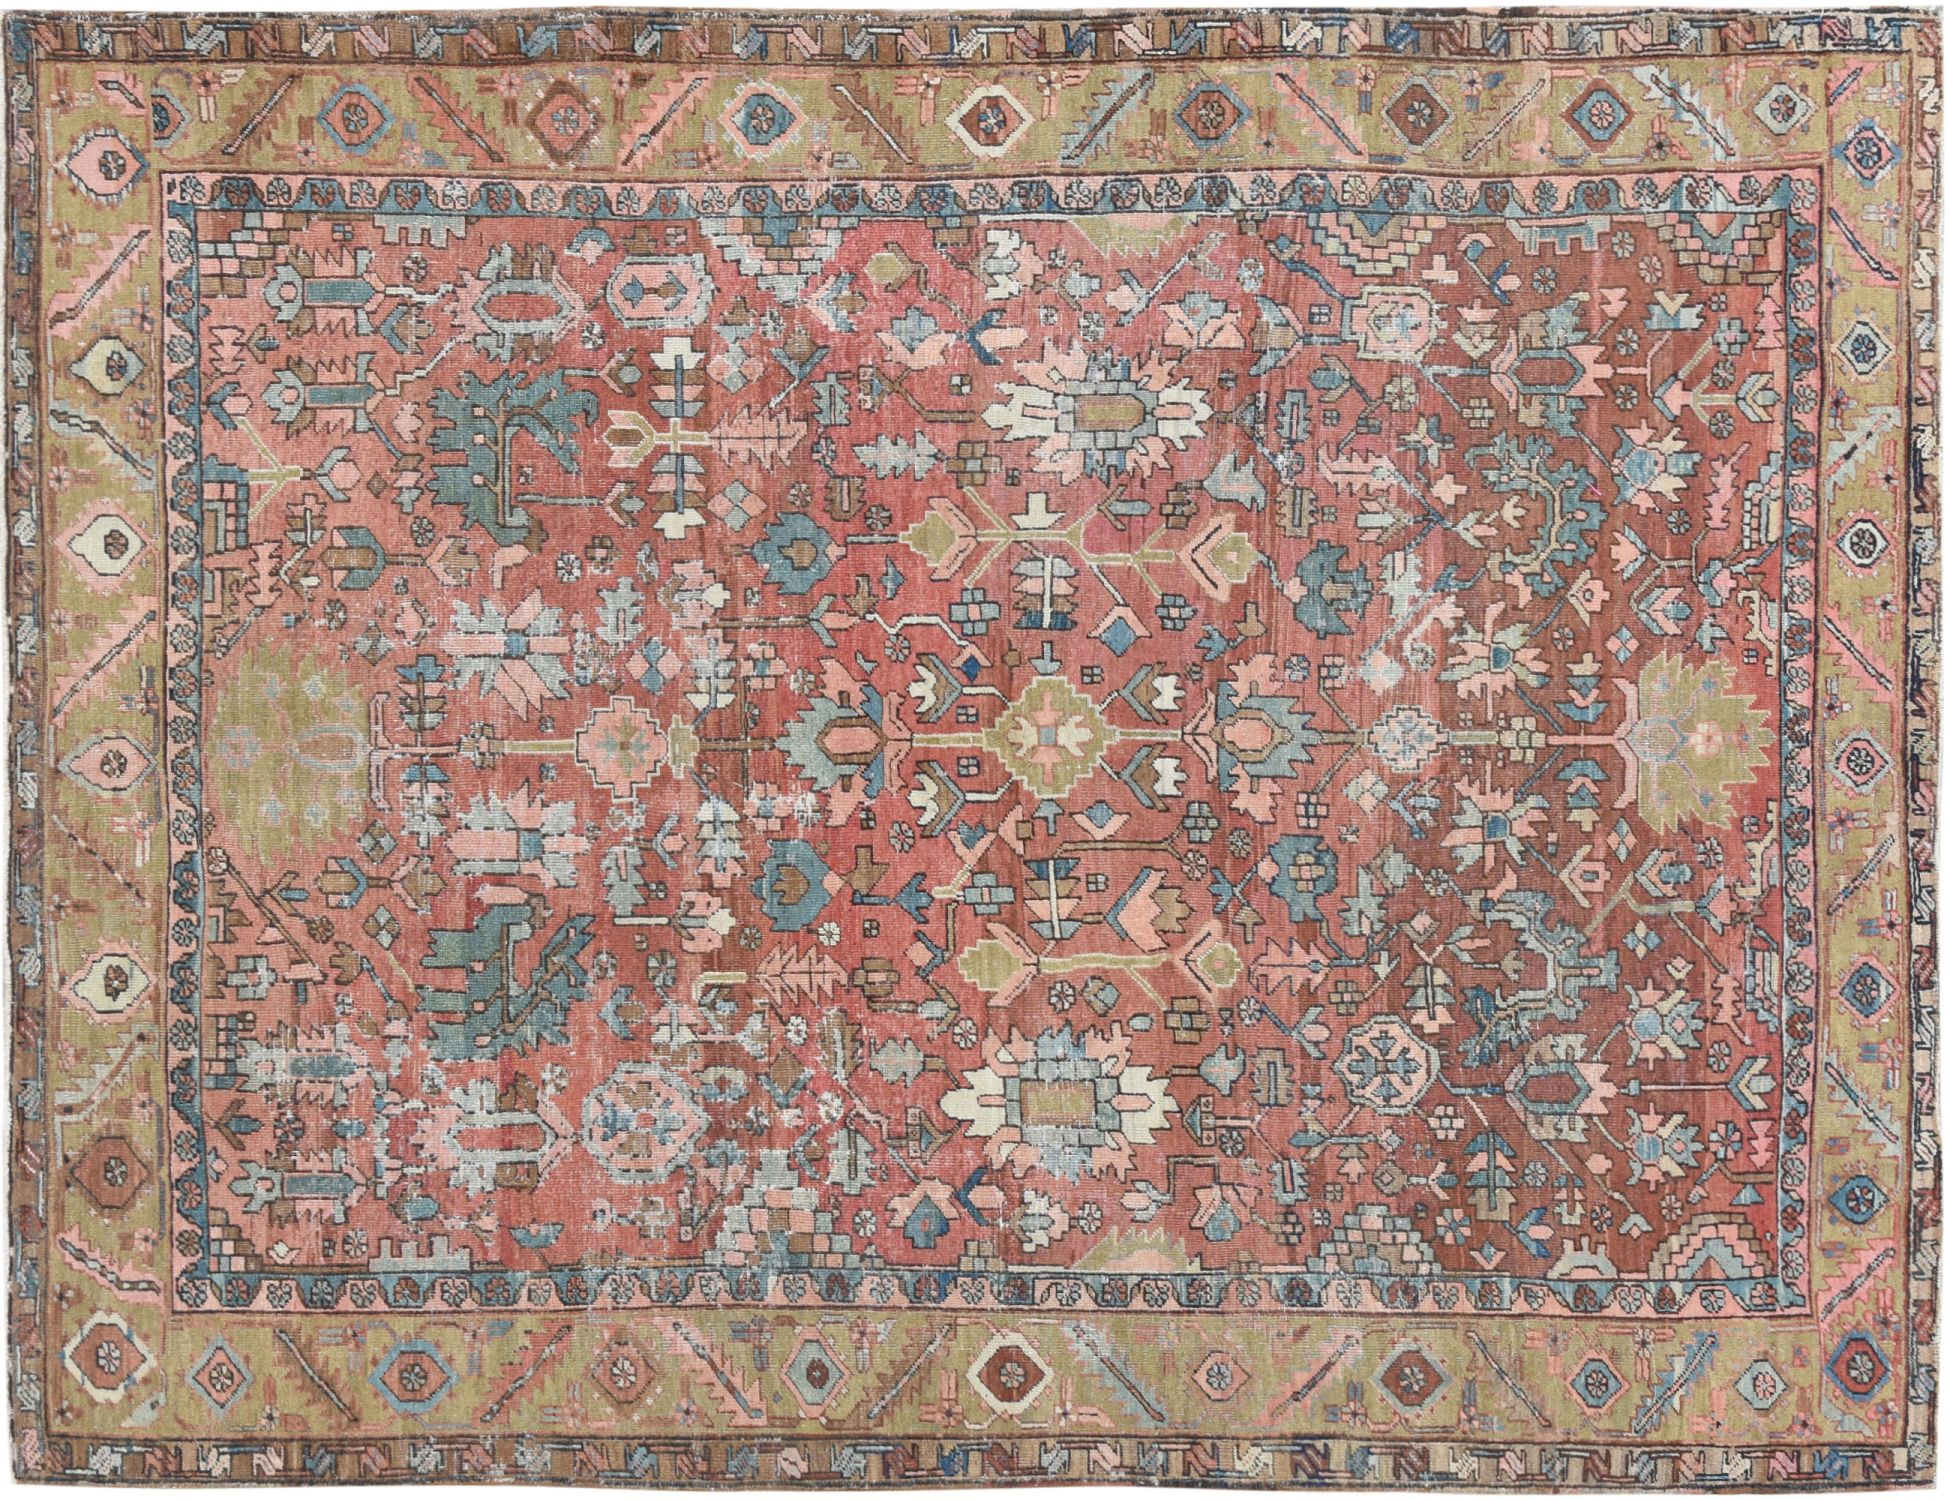  Persian    Μπεζ <br/>335 x 260 cm